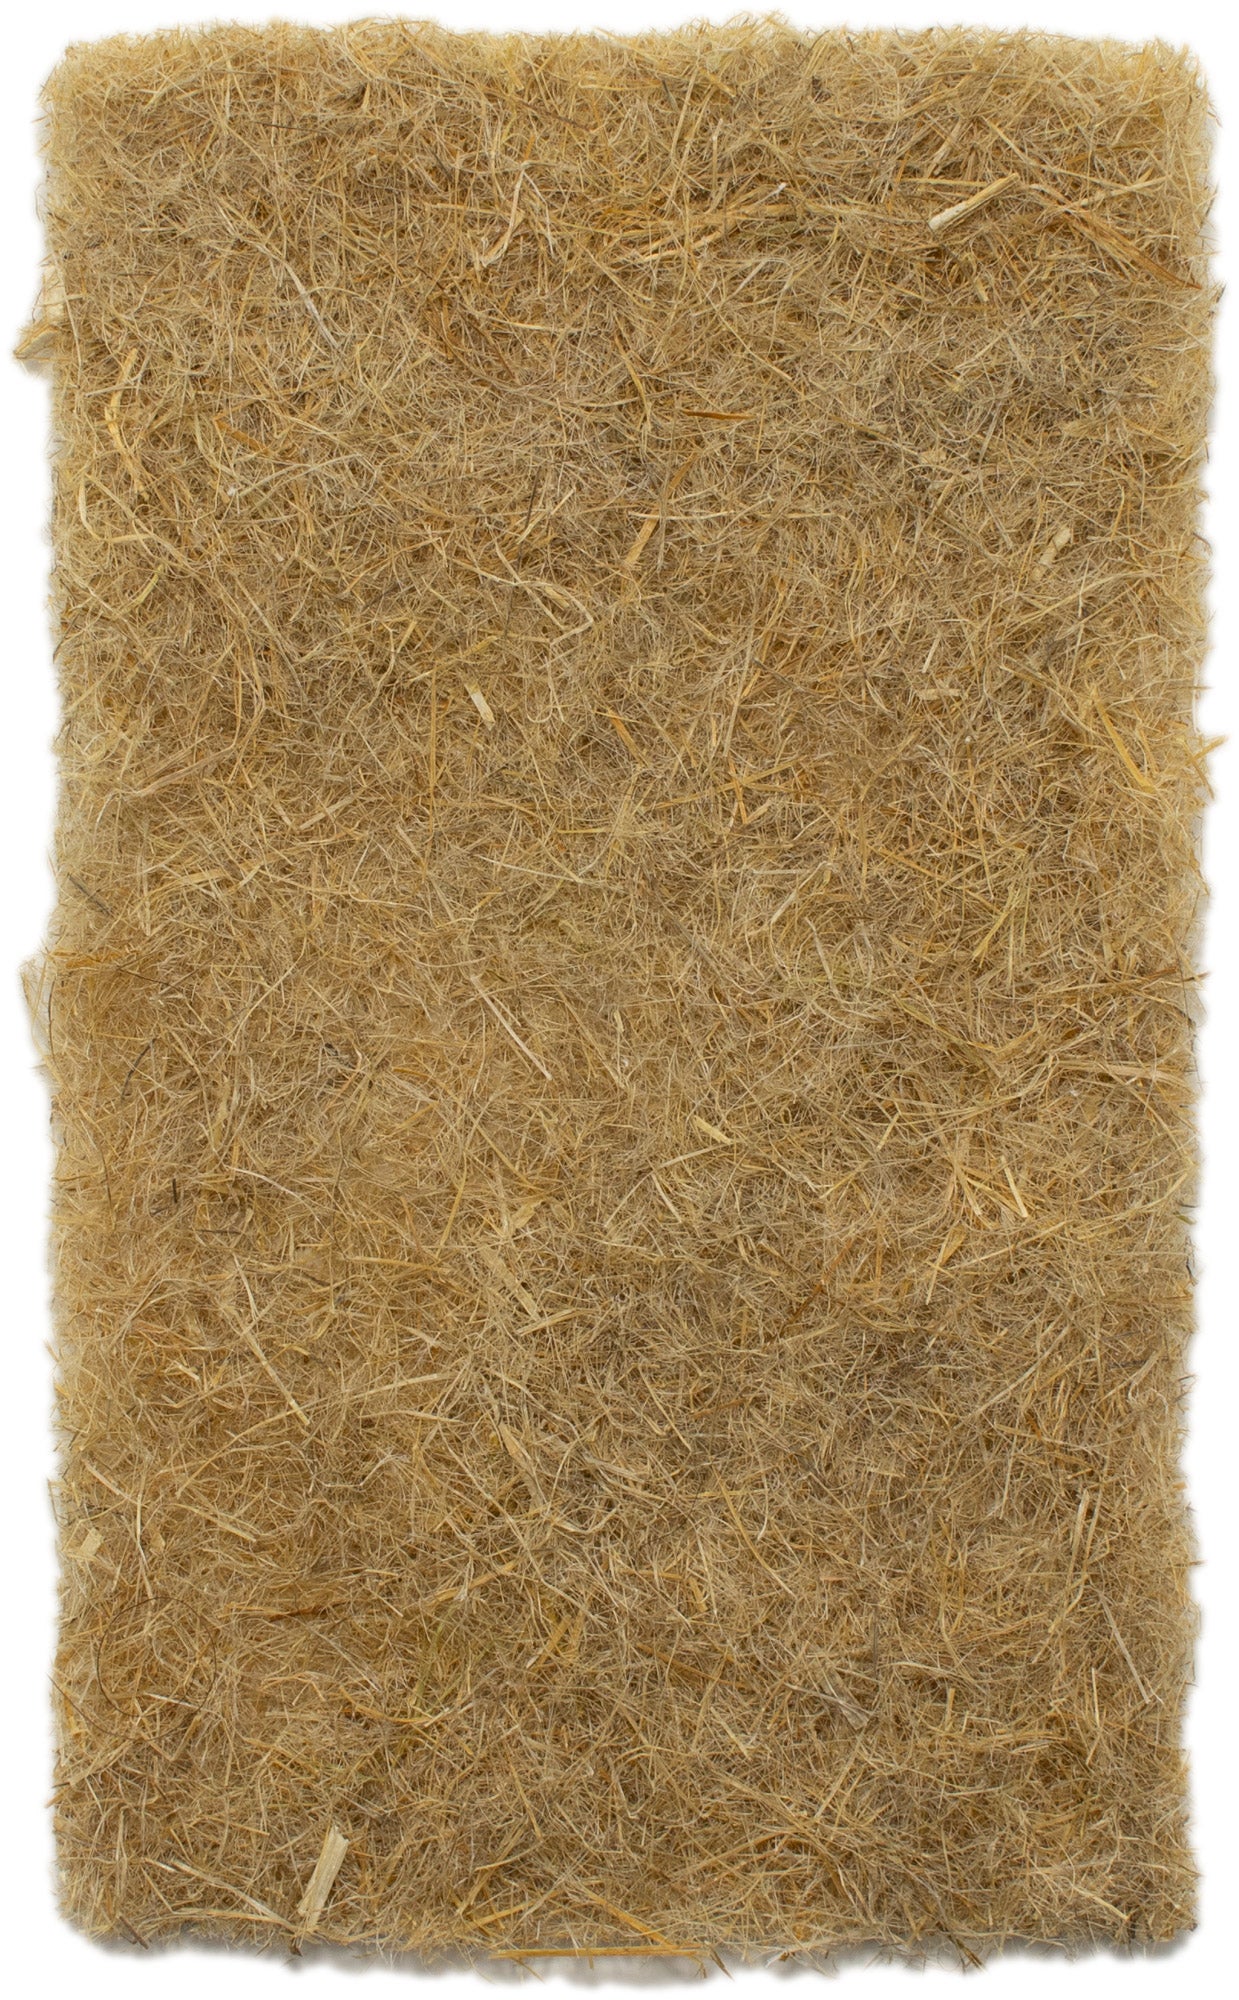 natural hemp grow mats | made in Canada, 3.5x5"